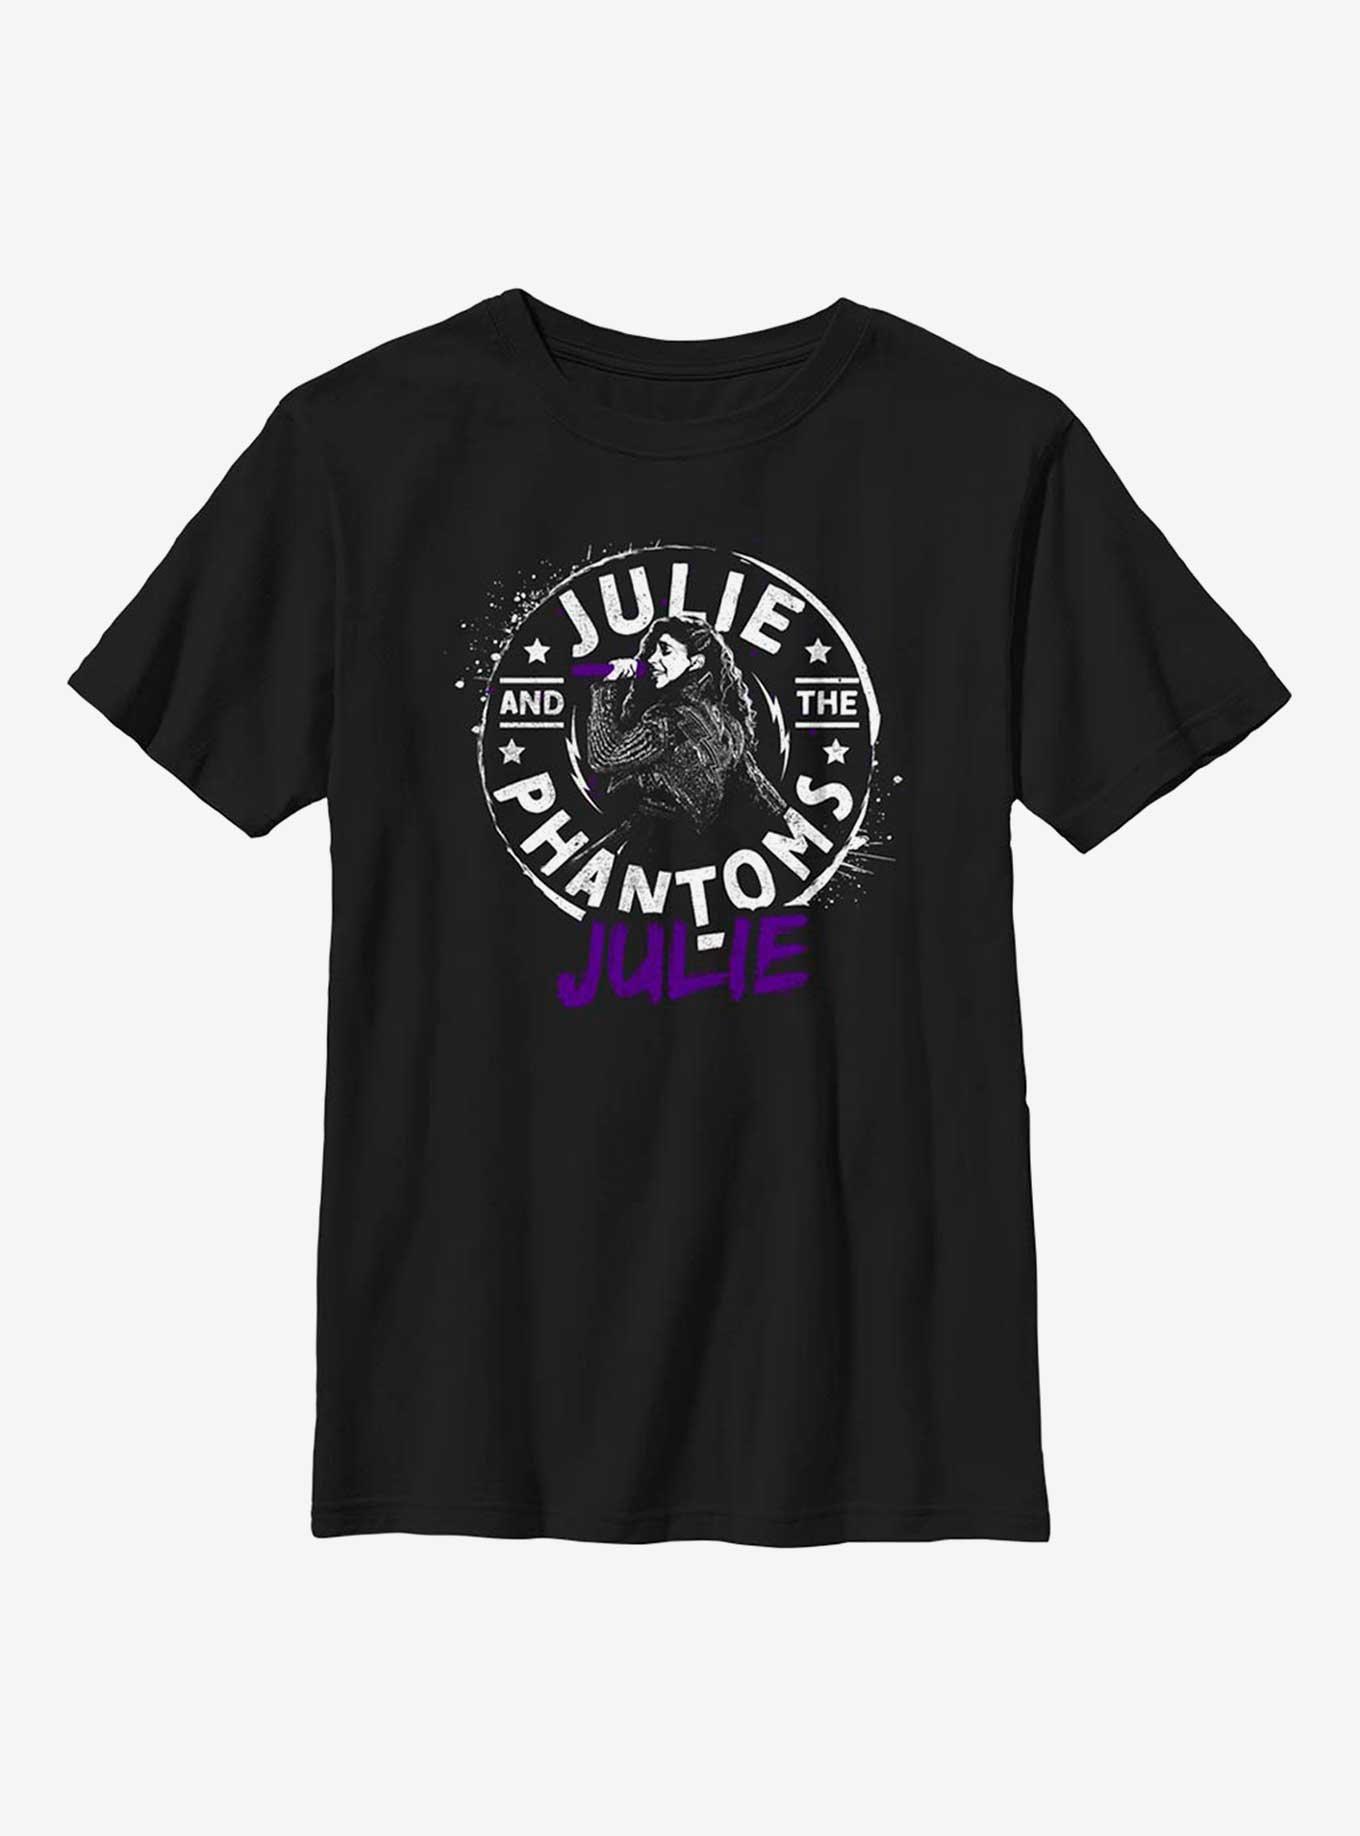 Julie And The Phantoms Grunge Youth T-Shirt, BLACK, hi-res